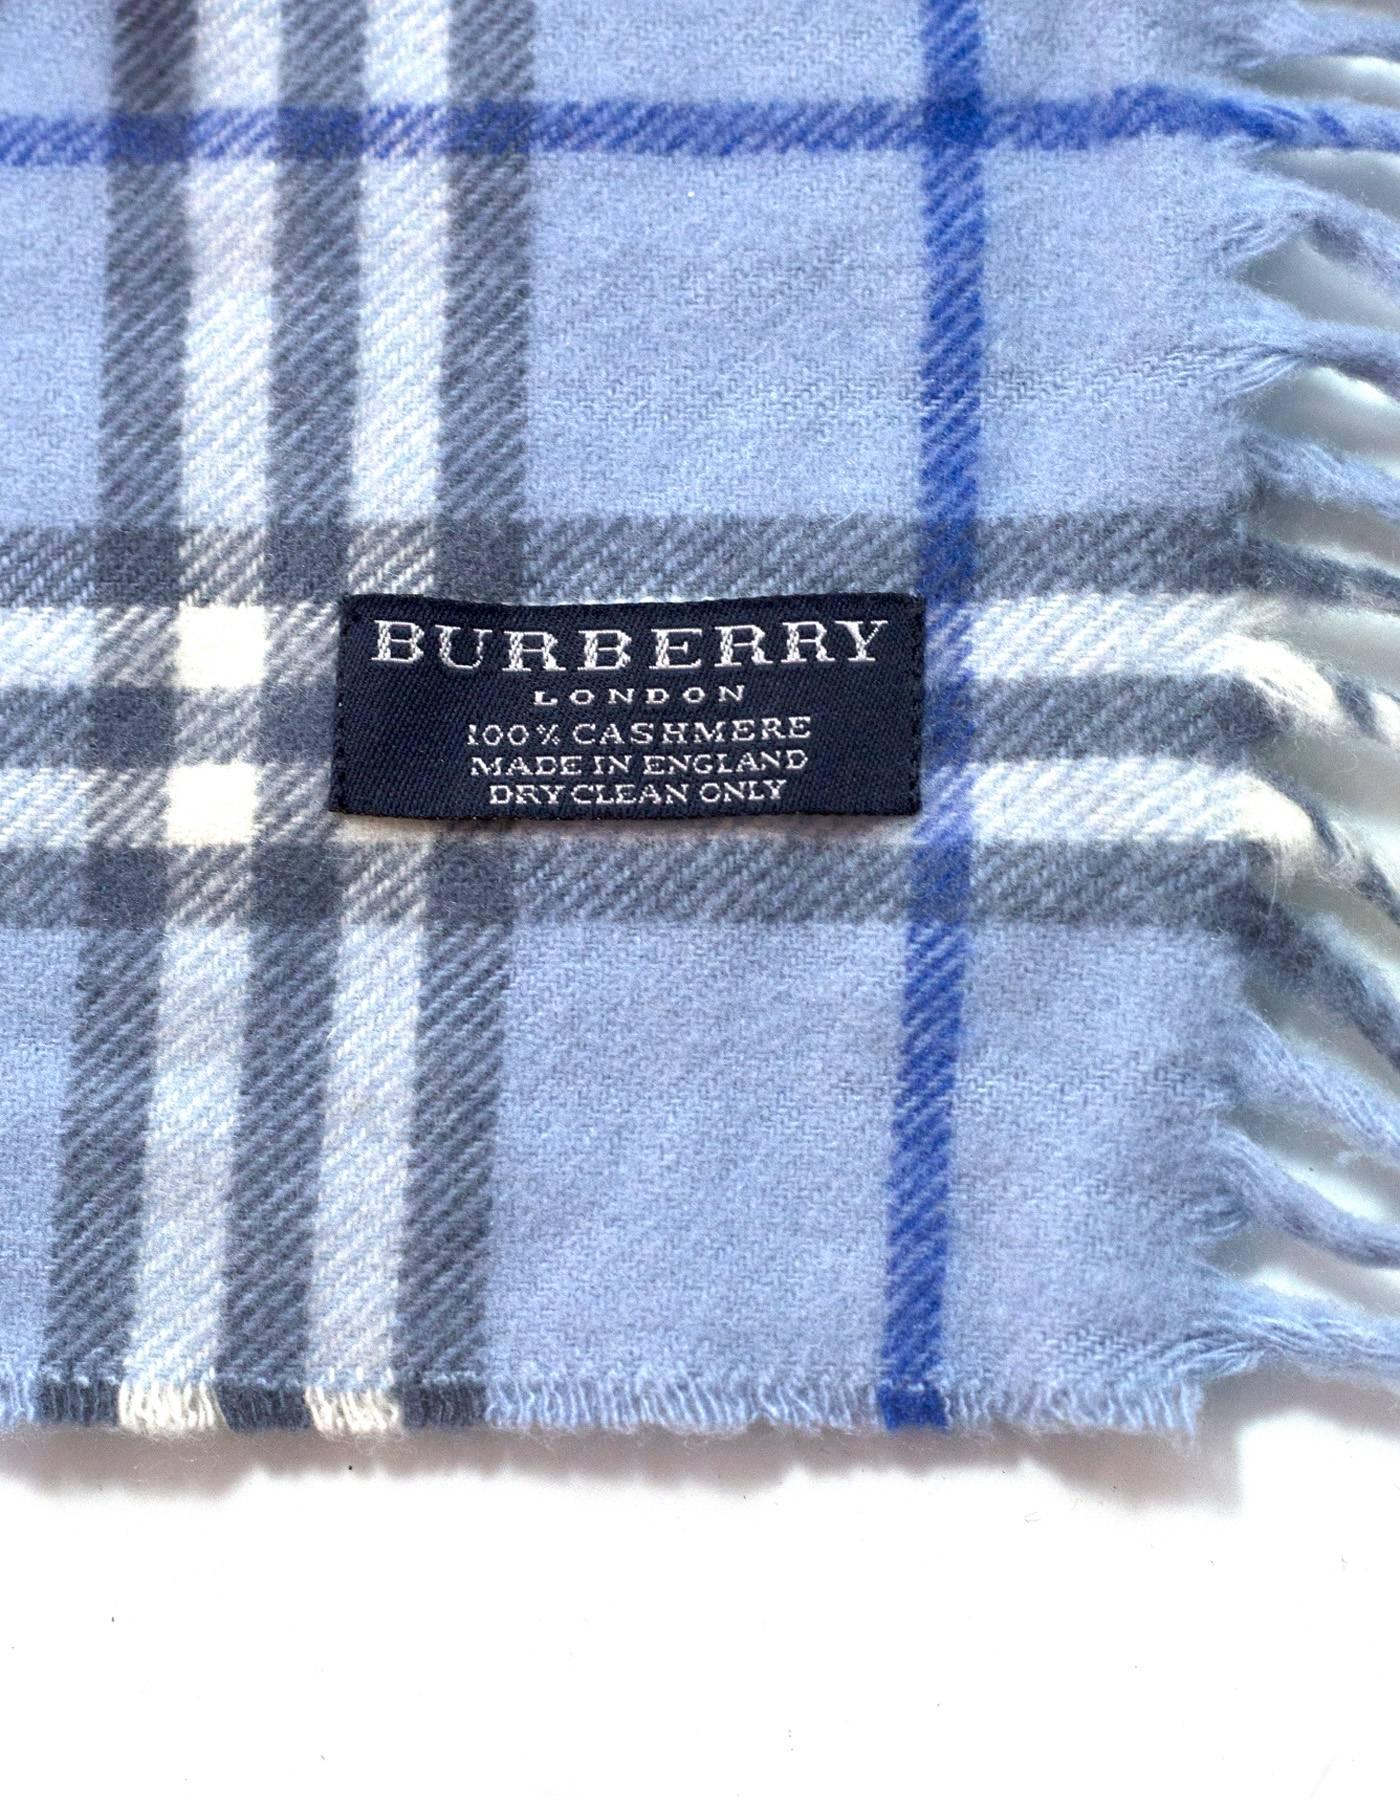 burberry happy scarf